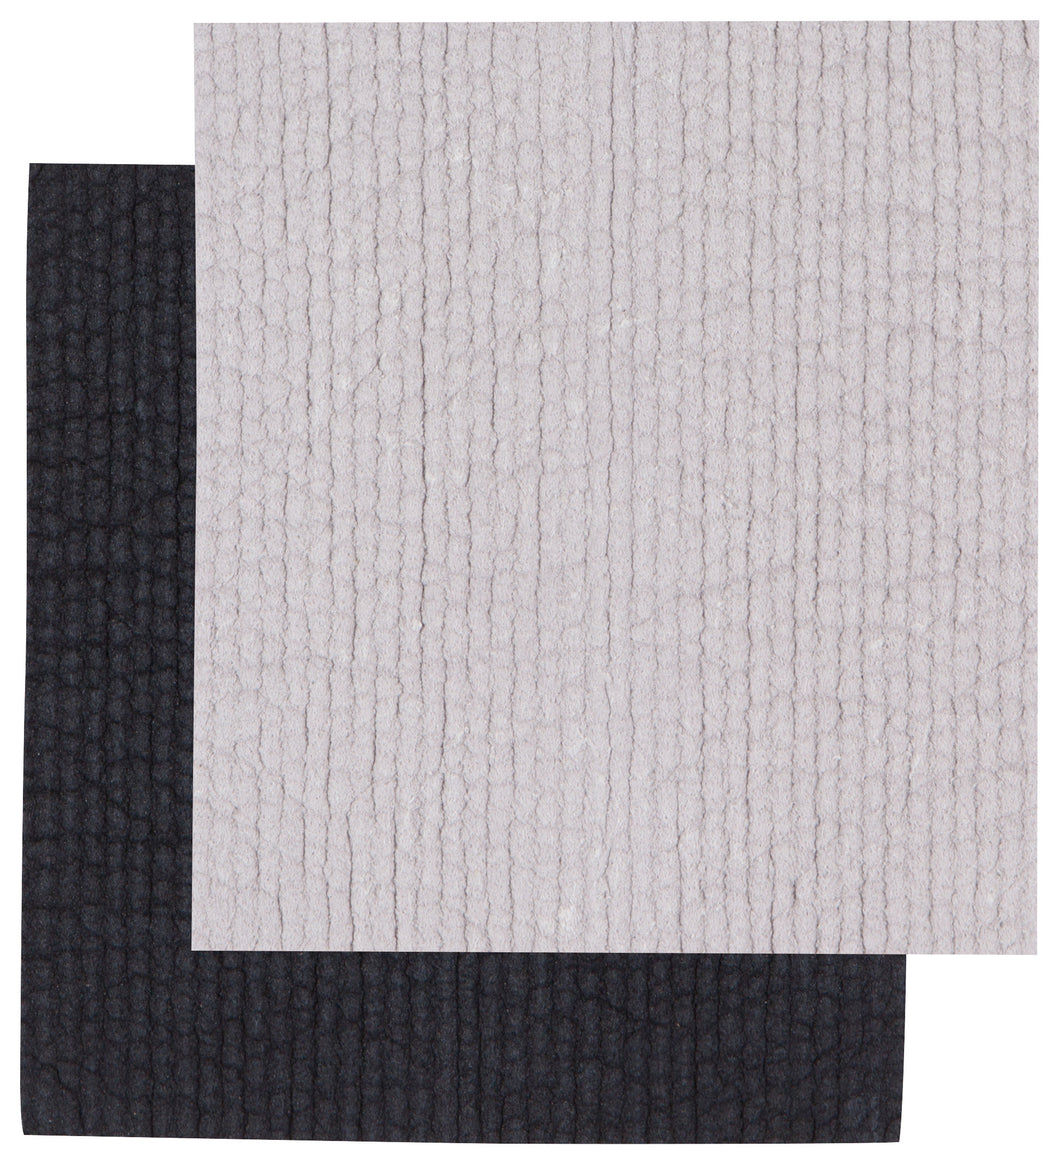 Pebble Gray and Black Sponge Cloth Set of 2